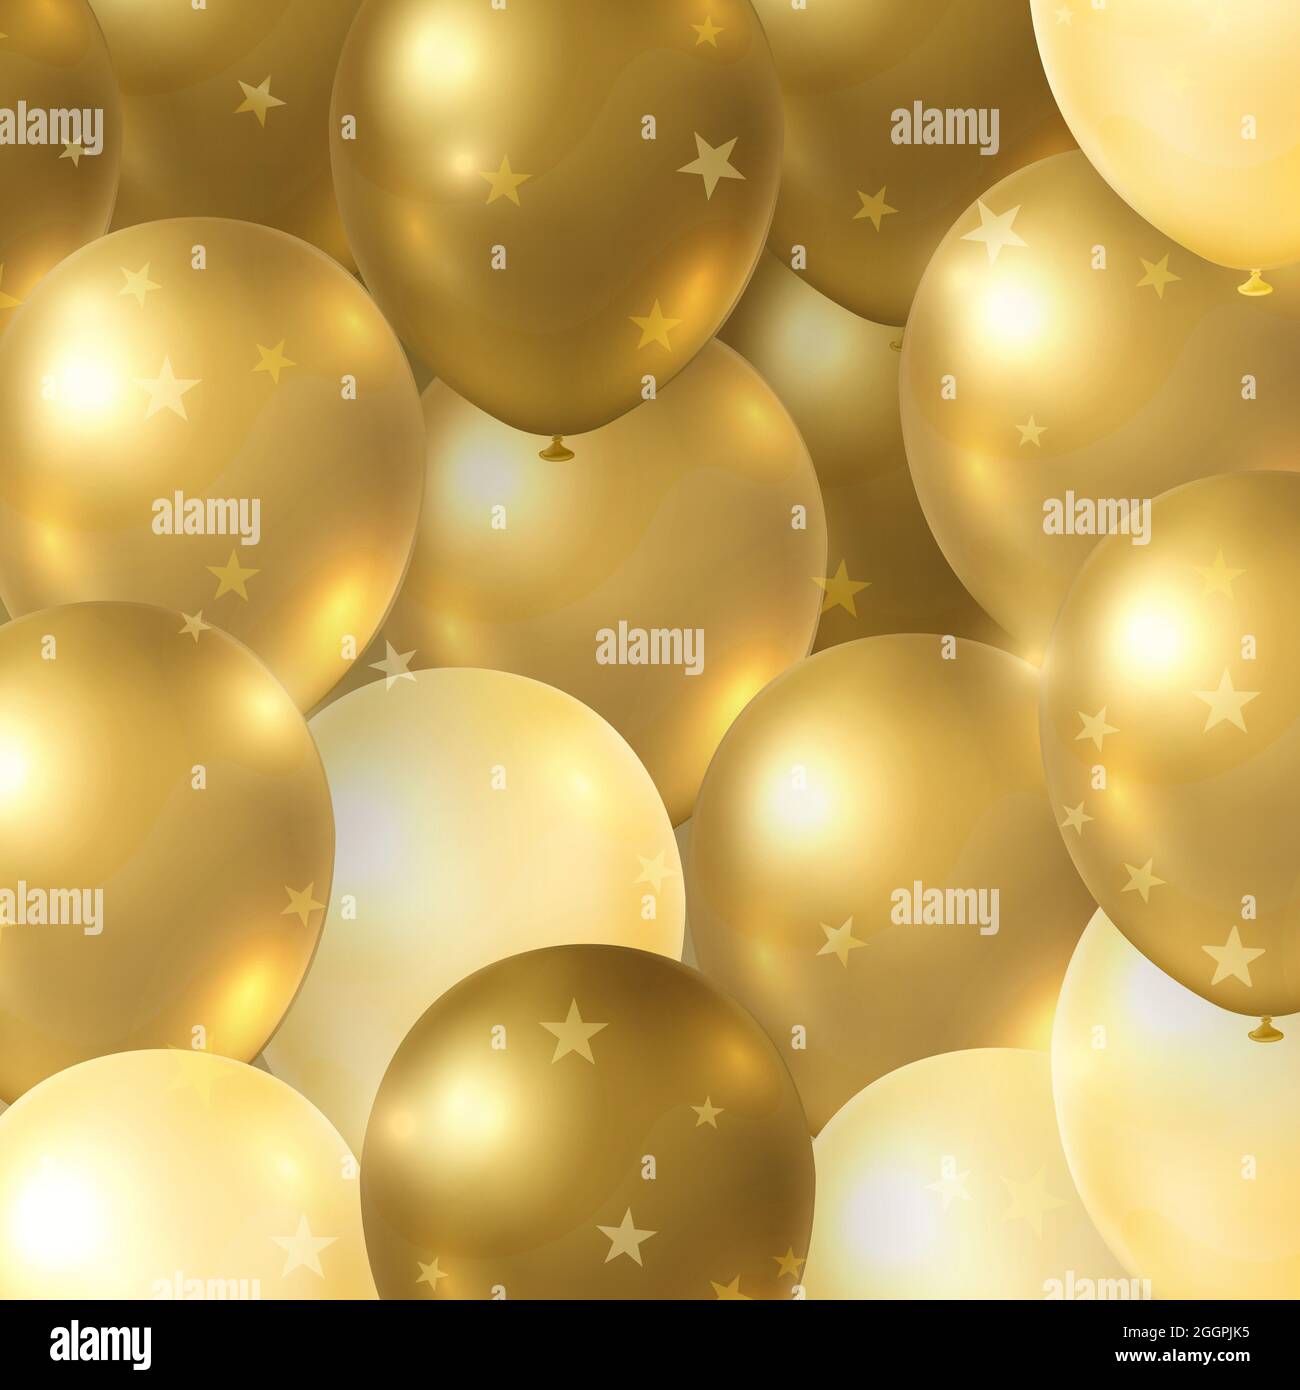 Elegant golden yellow ballon Happy Birthday celebration card banner template background Stock Photo